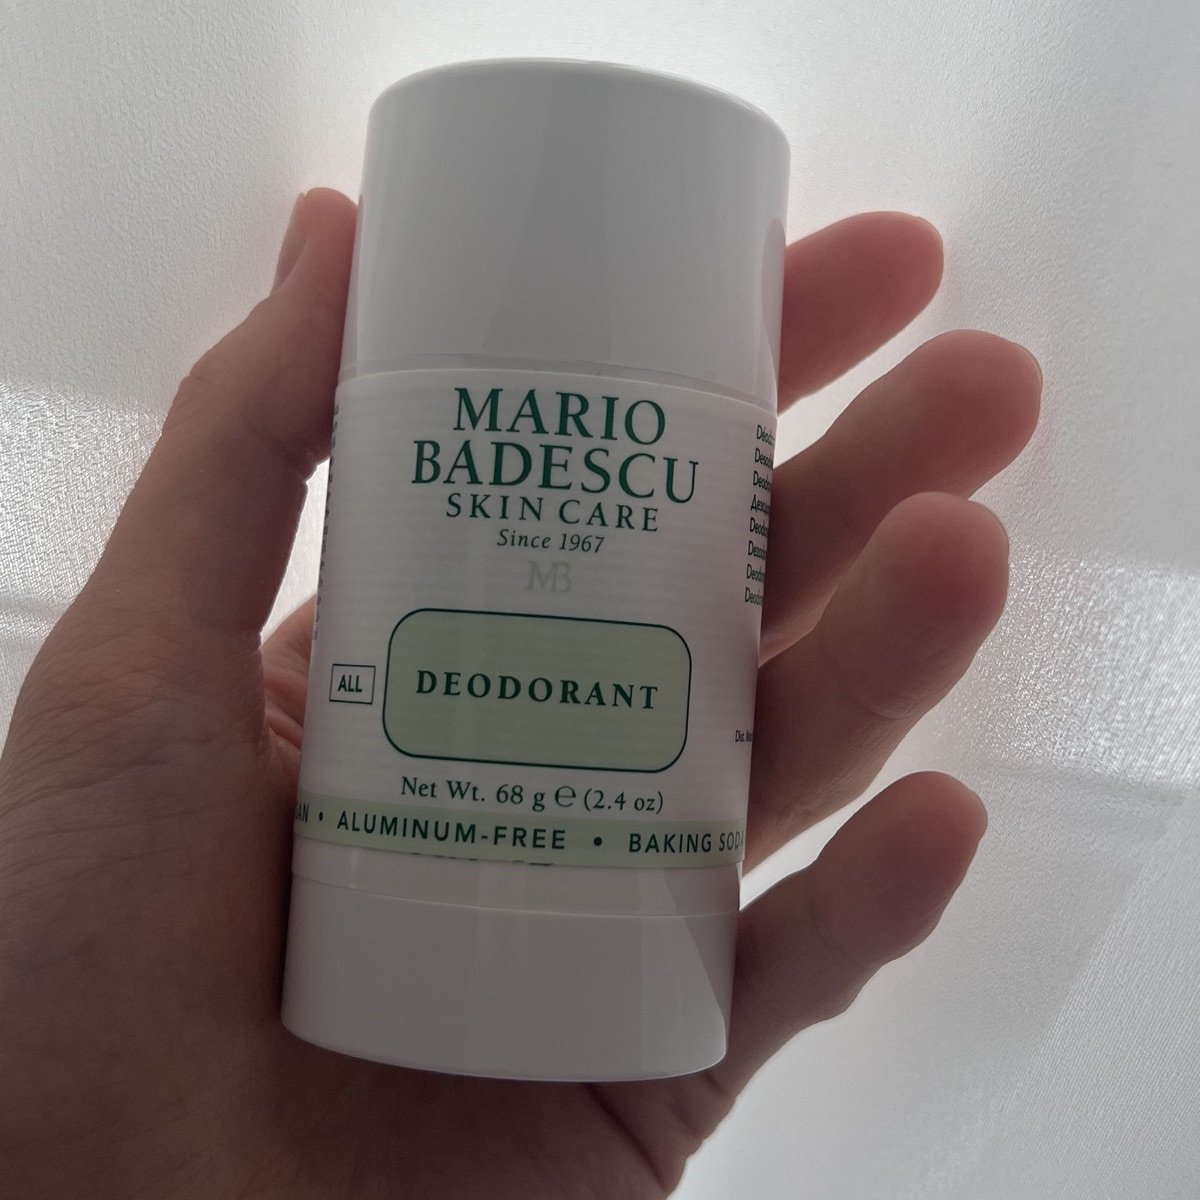 Mario Badescu all deodorant Reviews | abillion